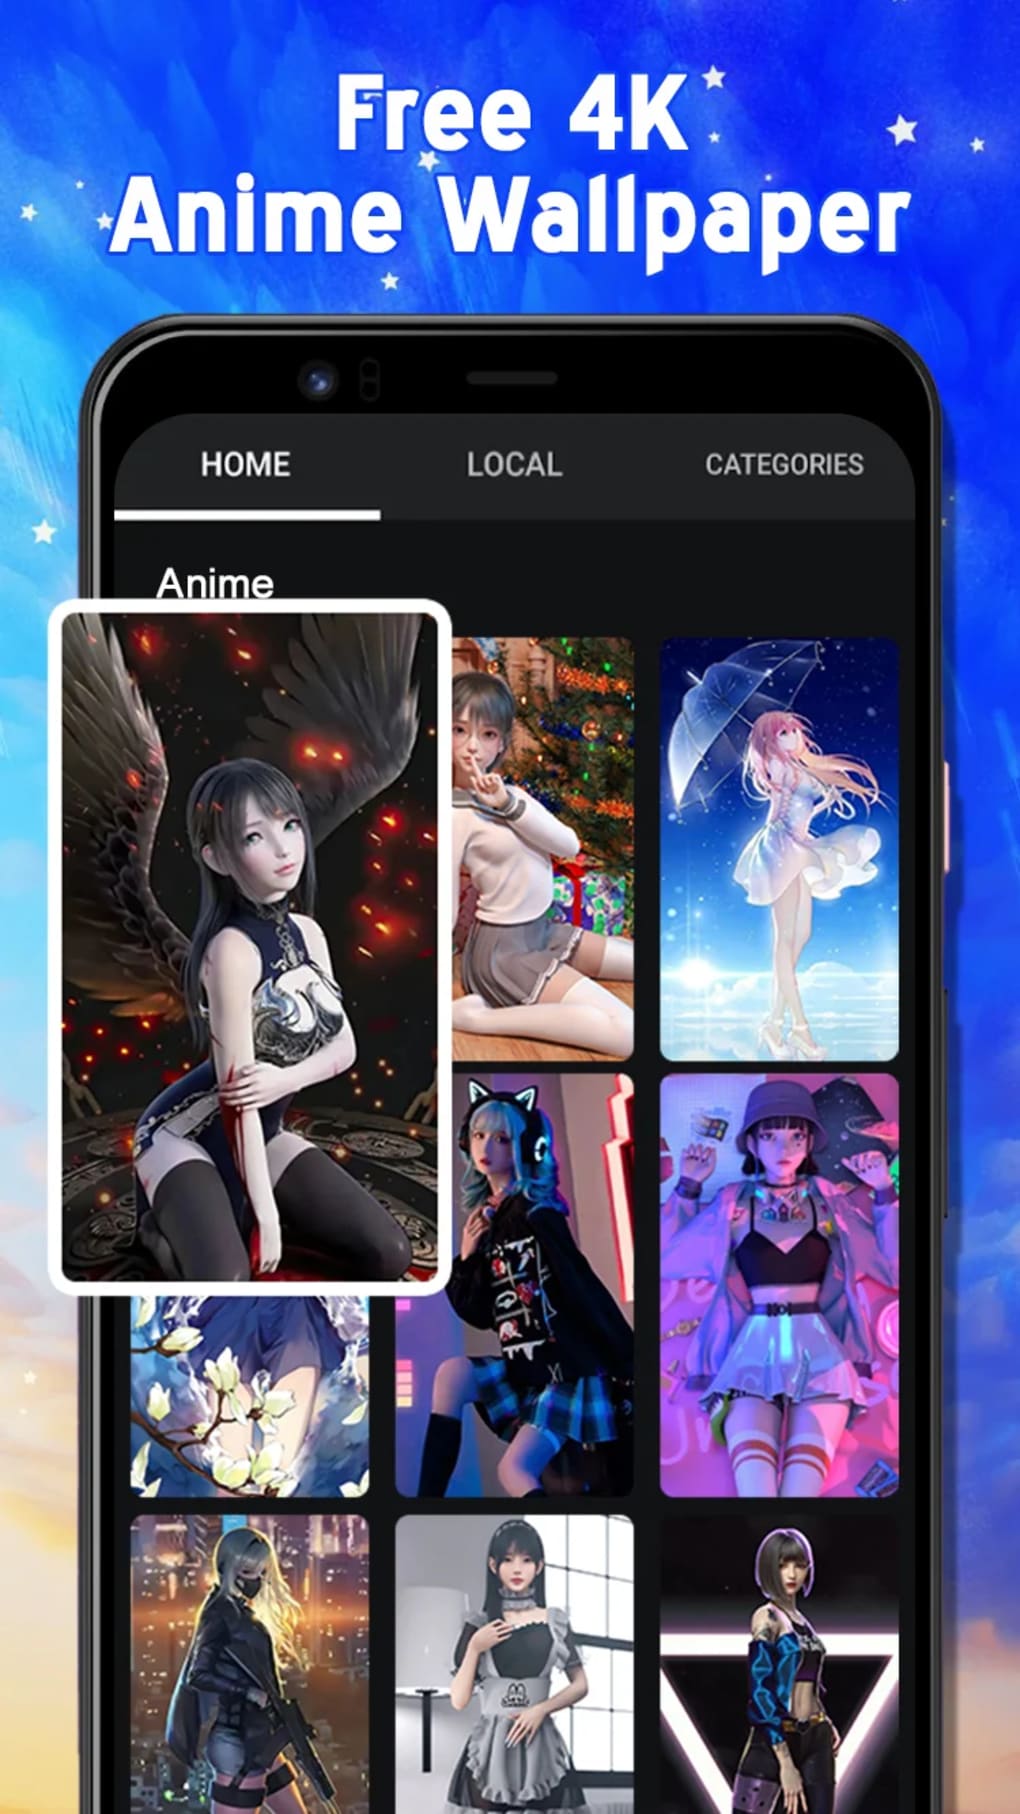 Live wallpaper Anime Girl - 4k Ultra HD [V3] + Media Integration /  interface personalization